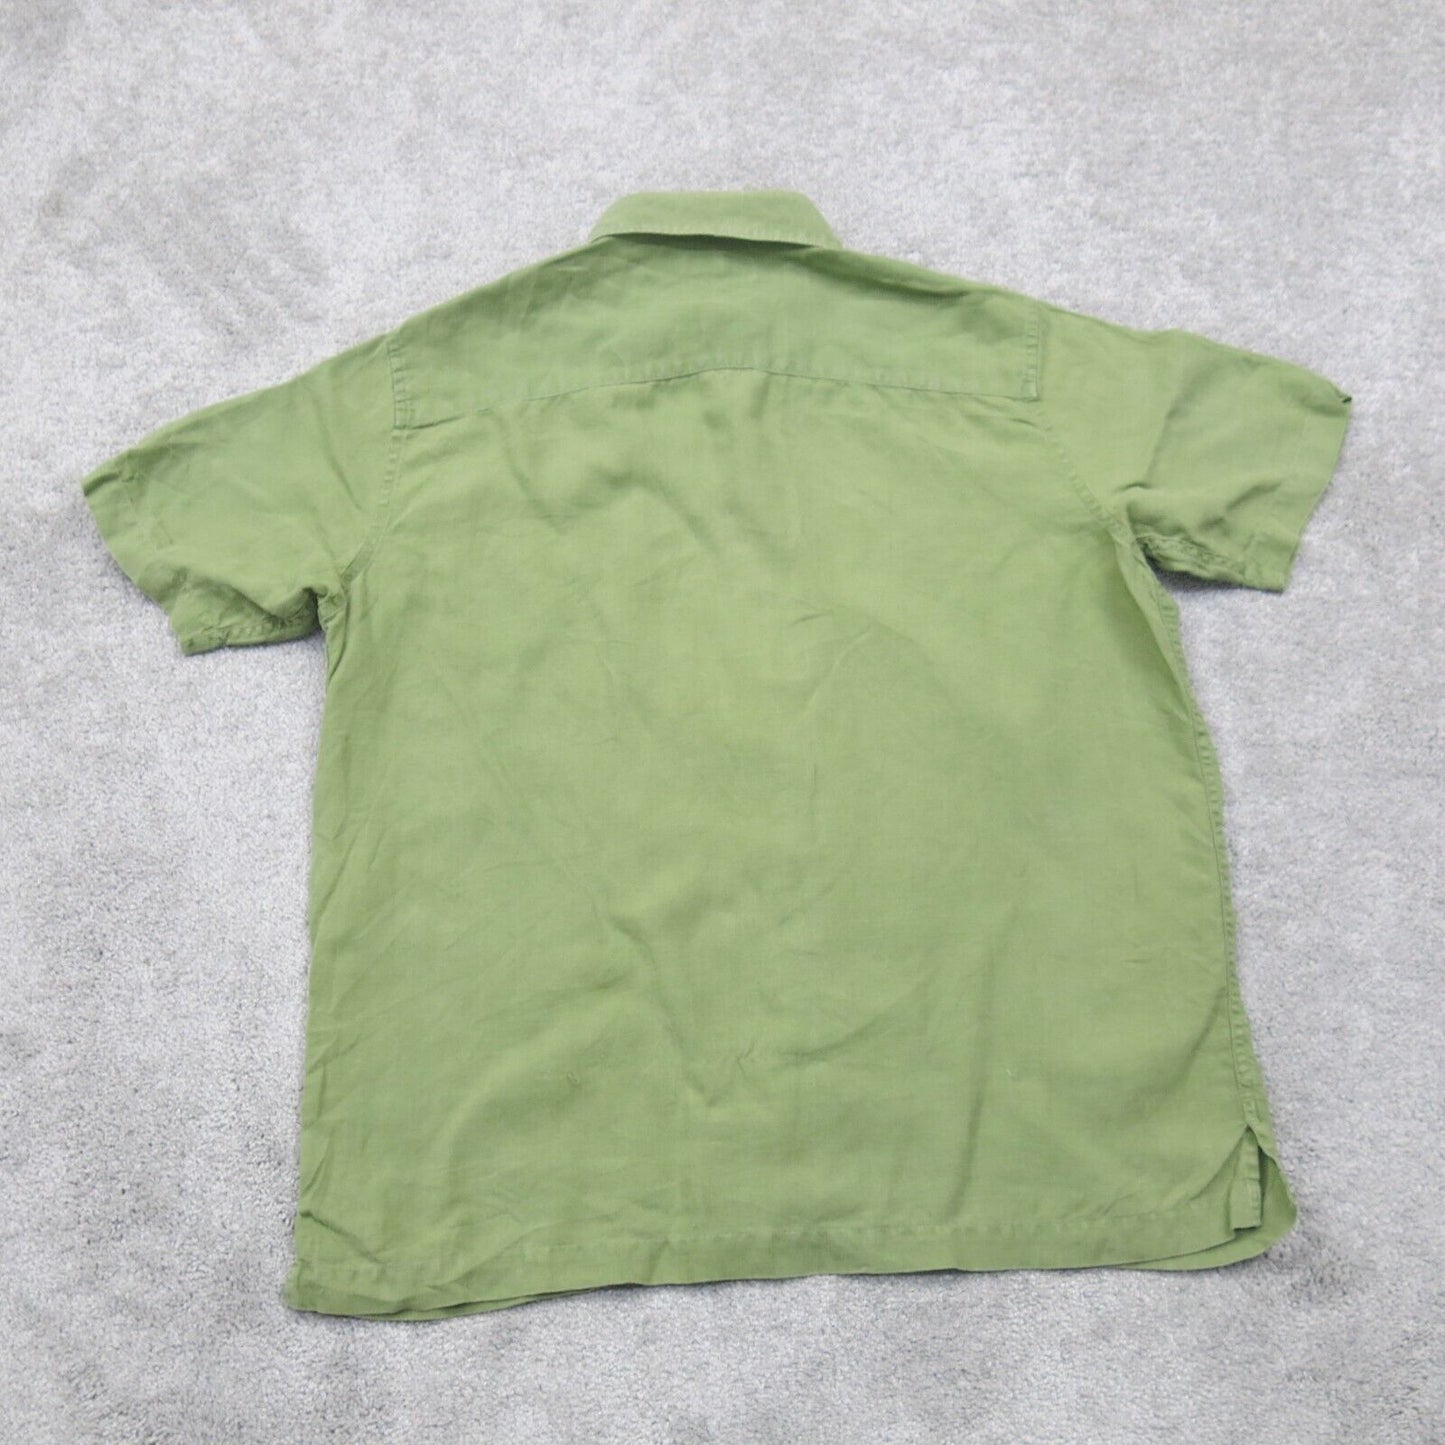 Banana Republic Mens Button Up Shirt Short Sleeve Chest Pocket Green Size Medium